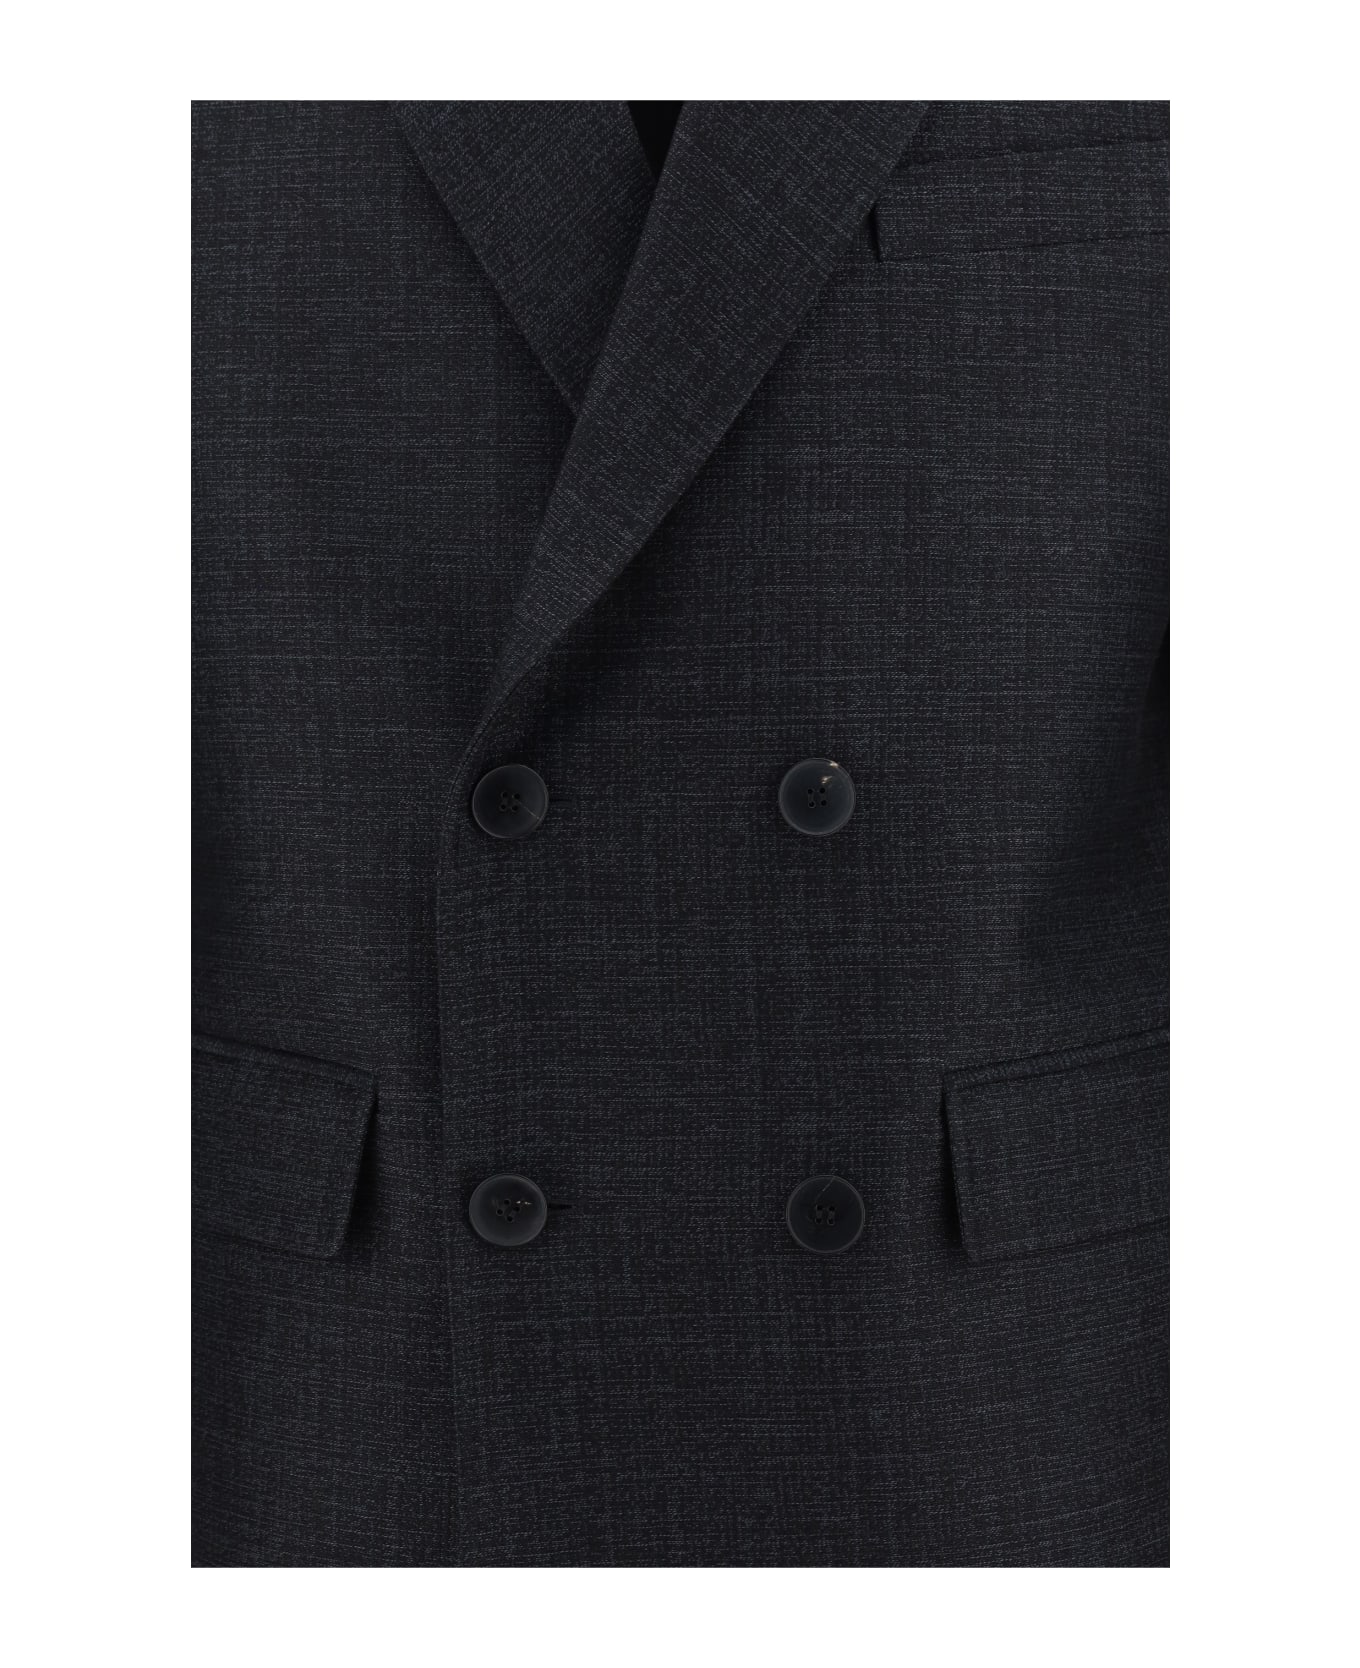 Valentino Formal Blazer Jacket - Grigio Scuro Melange